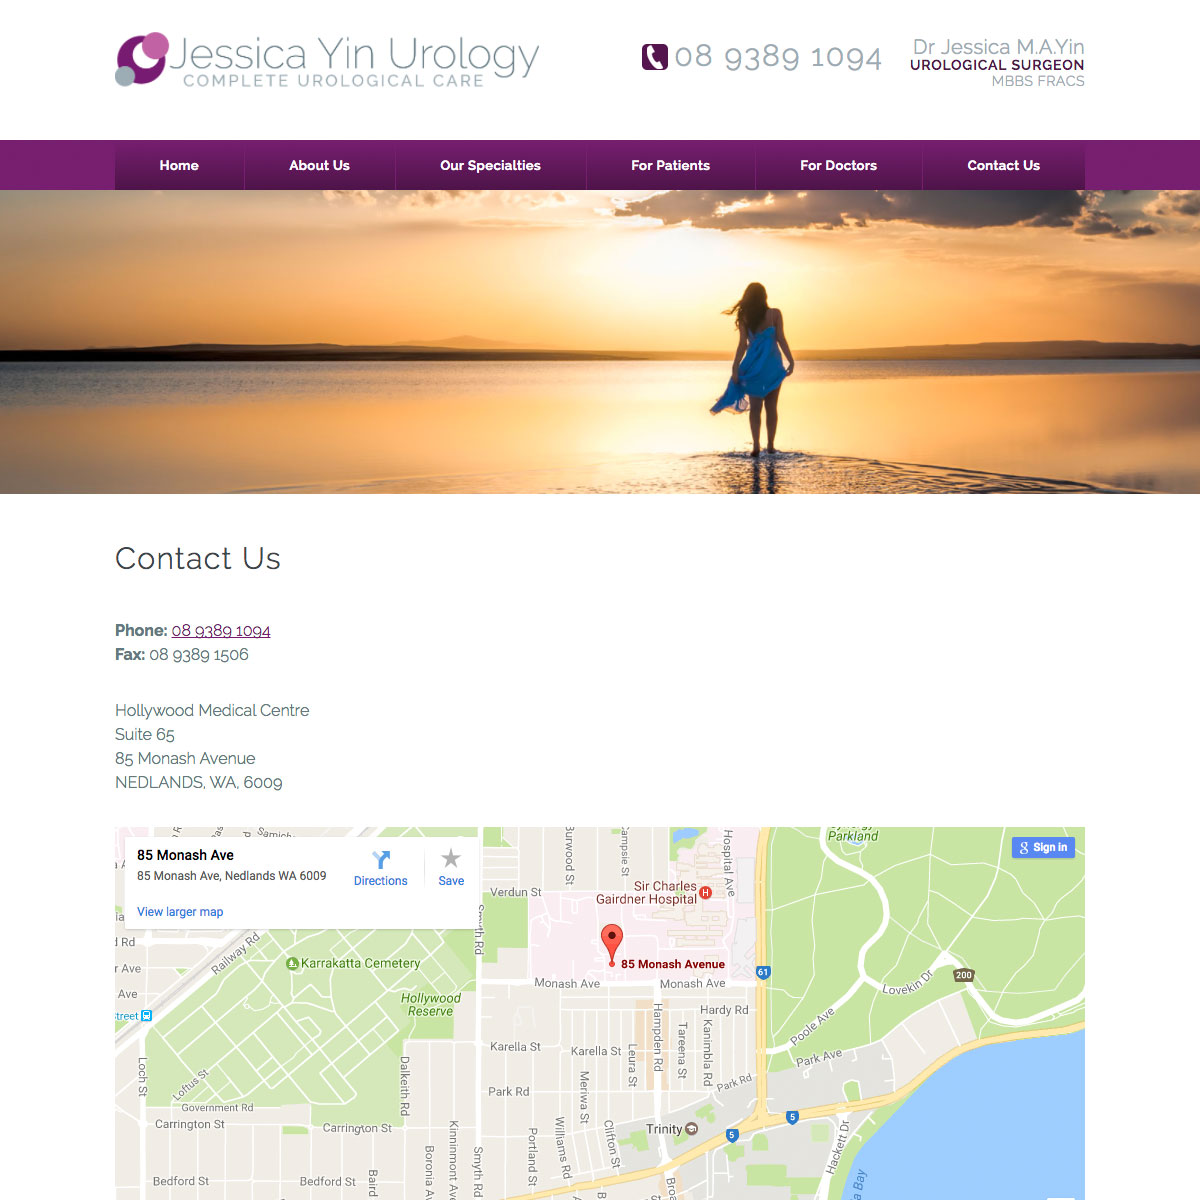 Jessica Yin Urology - Contact Us